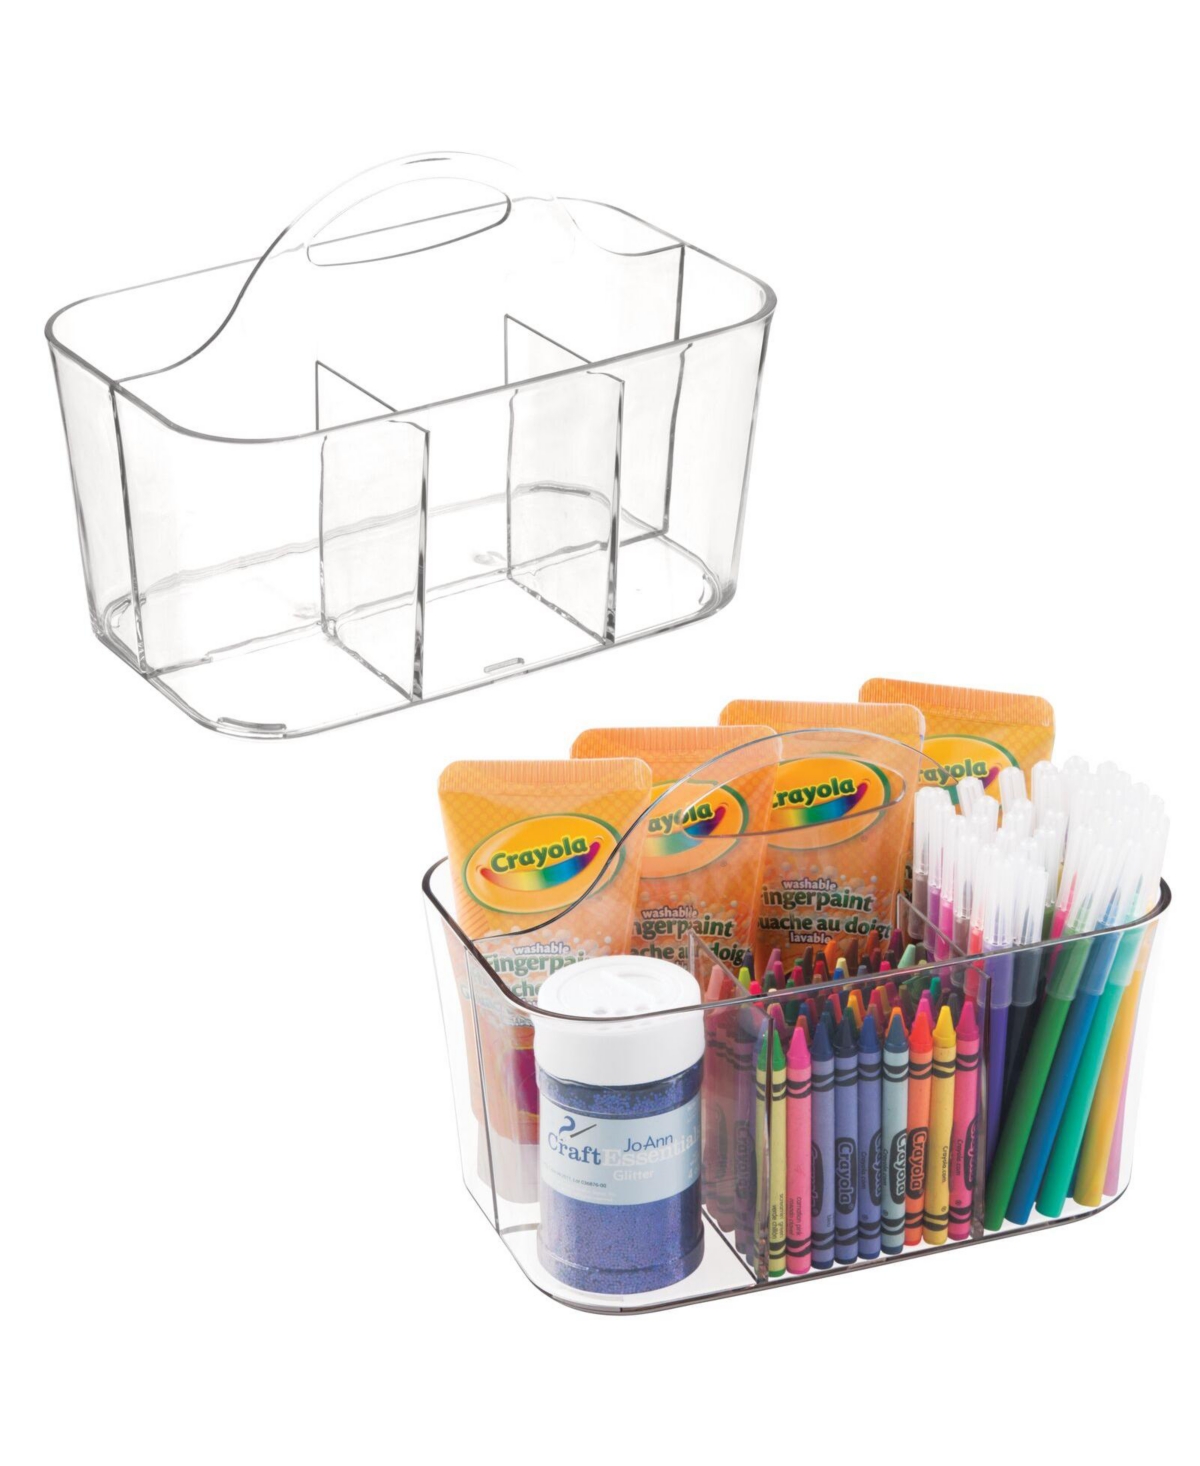 Plastic Sewing & Craft Storage Organizer Caddy Tote Bin - 2 Pack - Clear